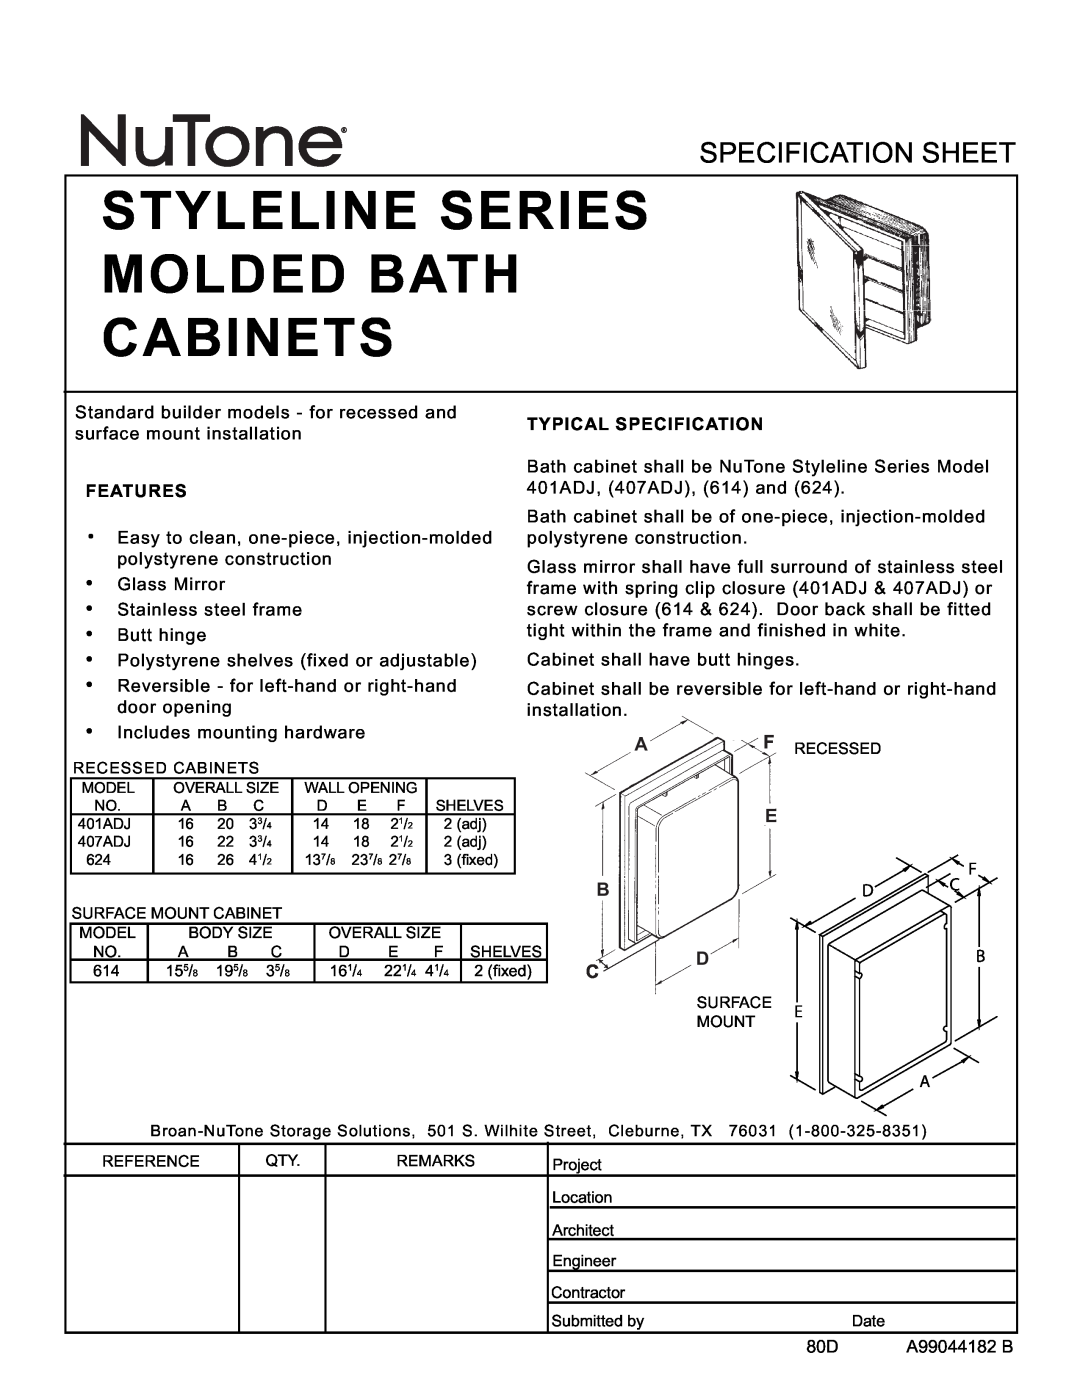 NuTone 407ADJ, 401ADJ, 614, 624 specifications Styleline Series Molded Bath Cabinets, Specification Sheet, Bd C, Features 